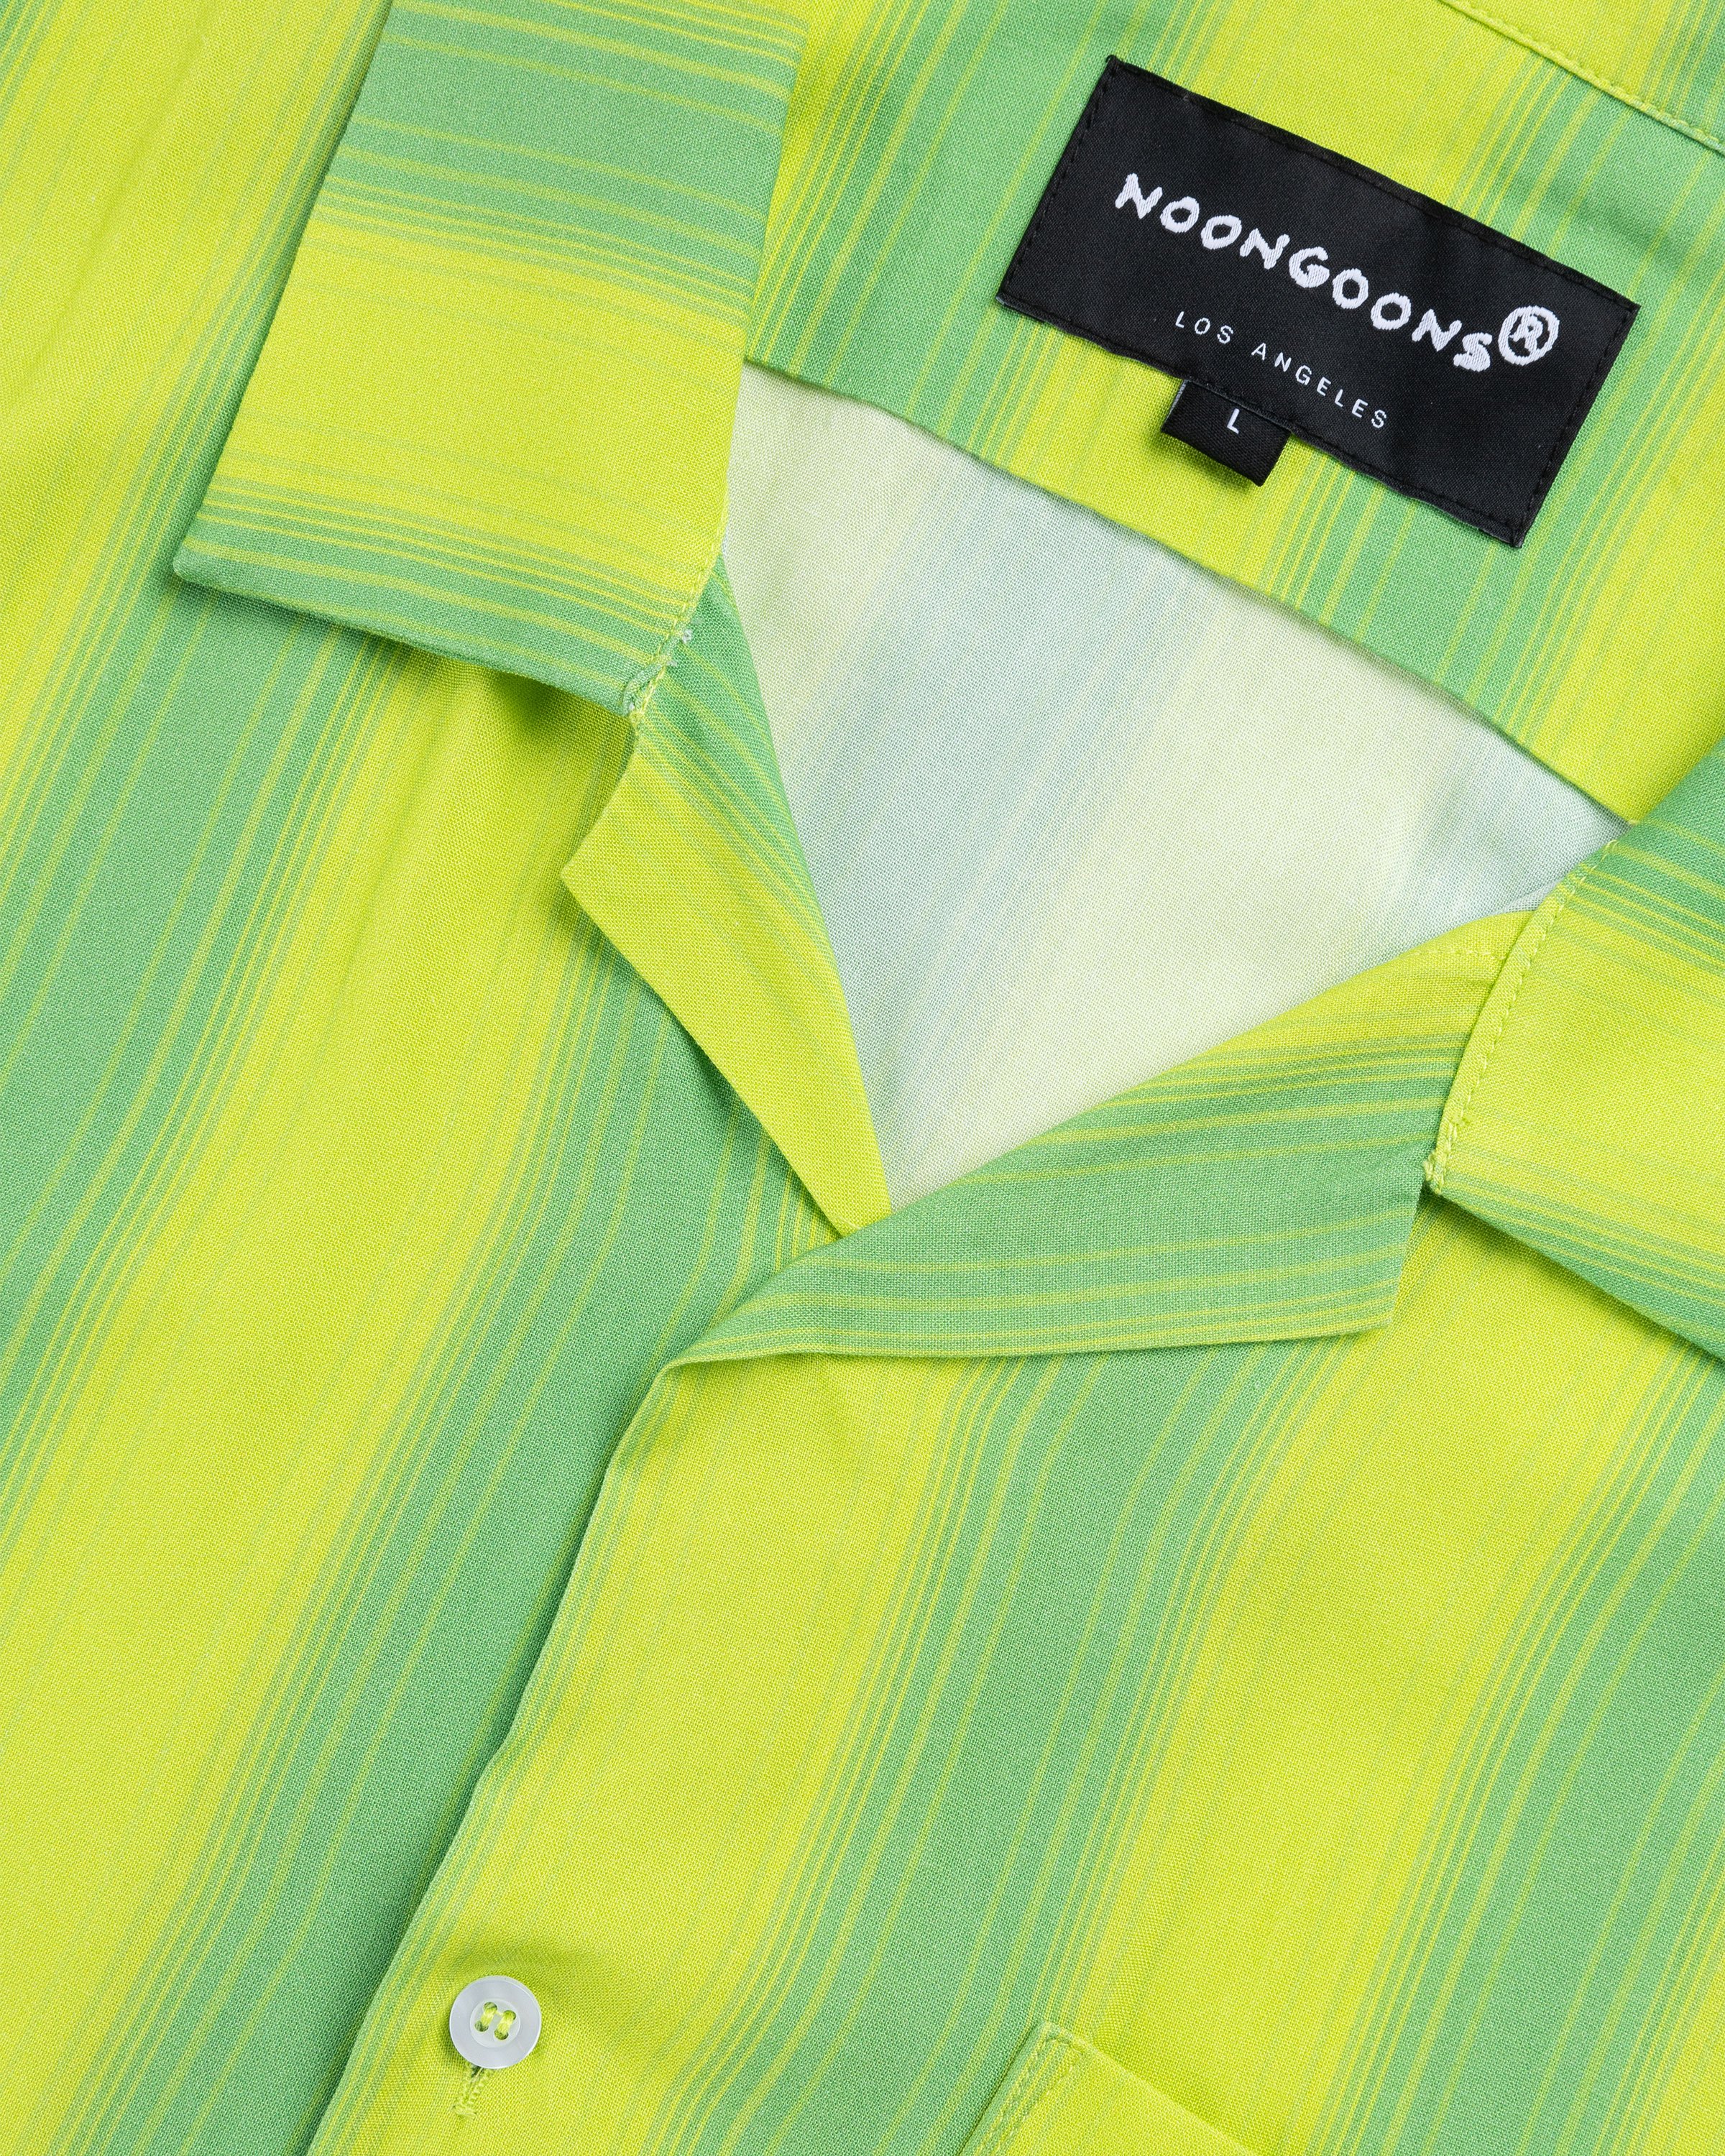 Noon Goons - High Society Shirt Limeade - Clothing - Green - Image 7